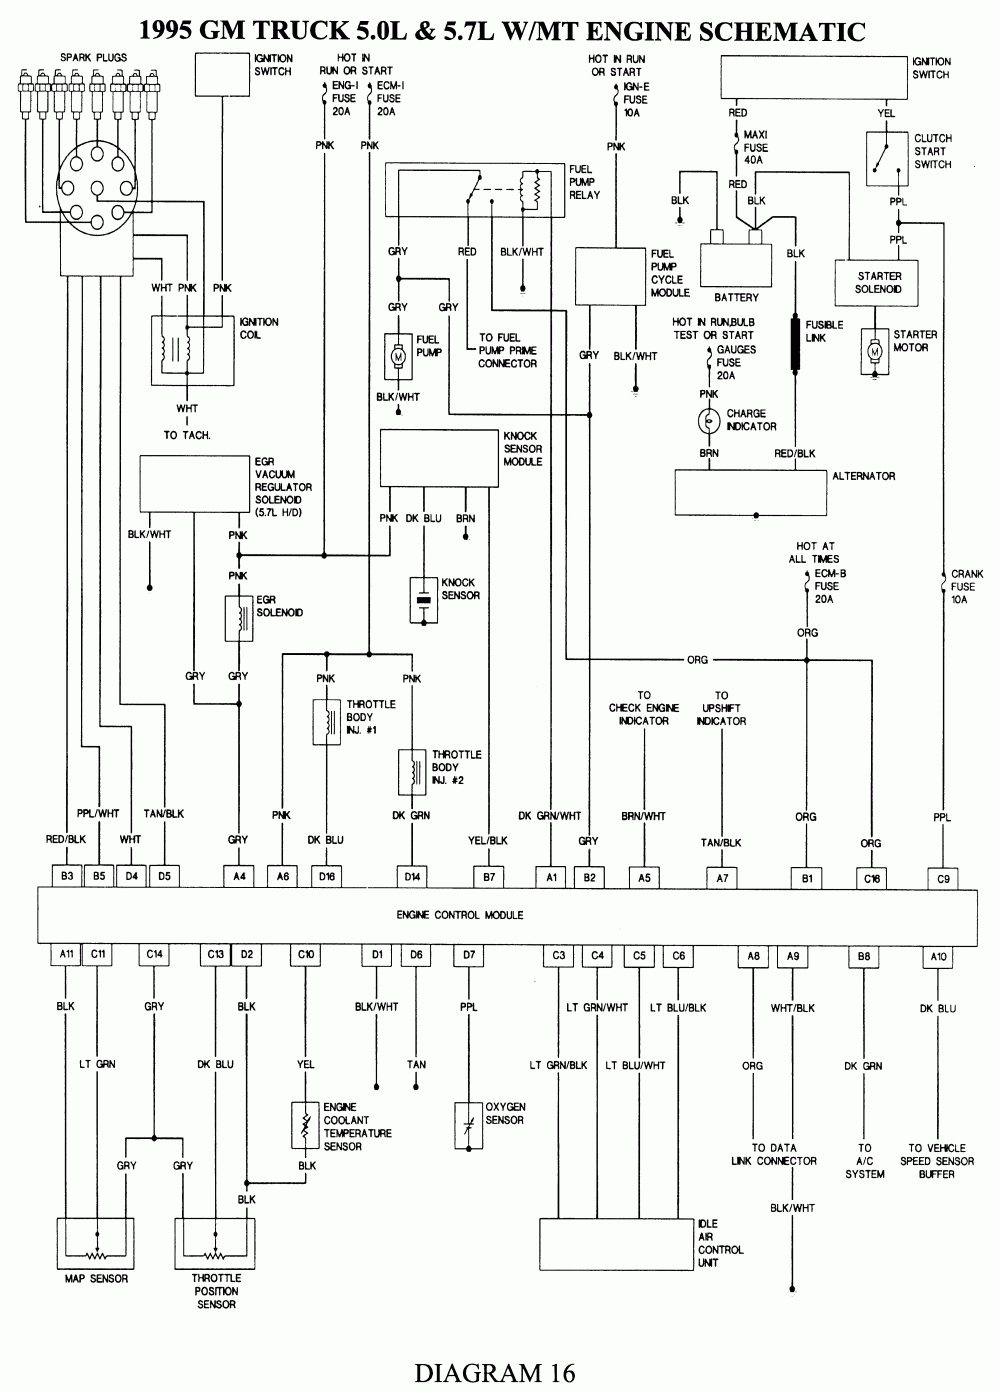 1995 Chevy Silverado Wiring Diagram | Wiring Diagram